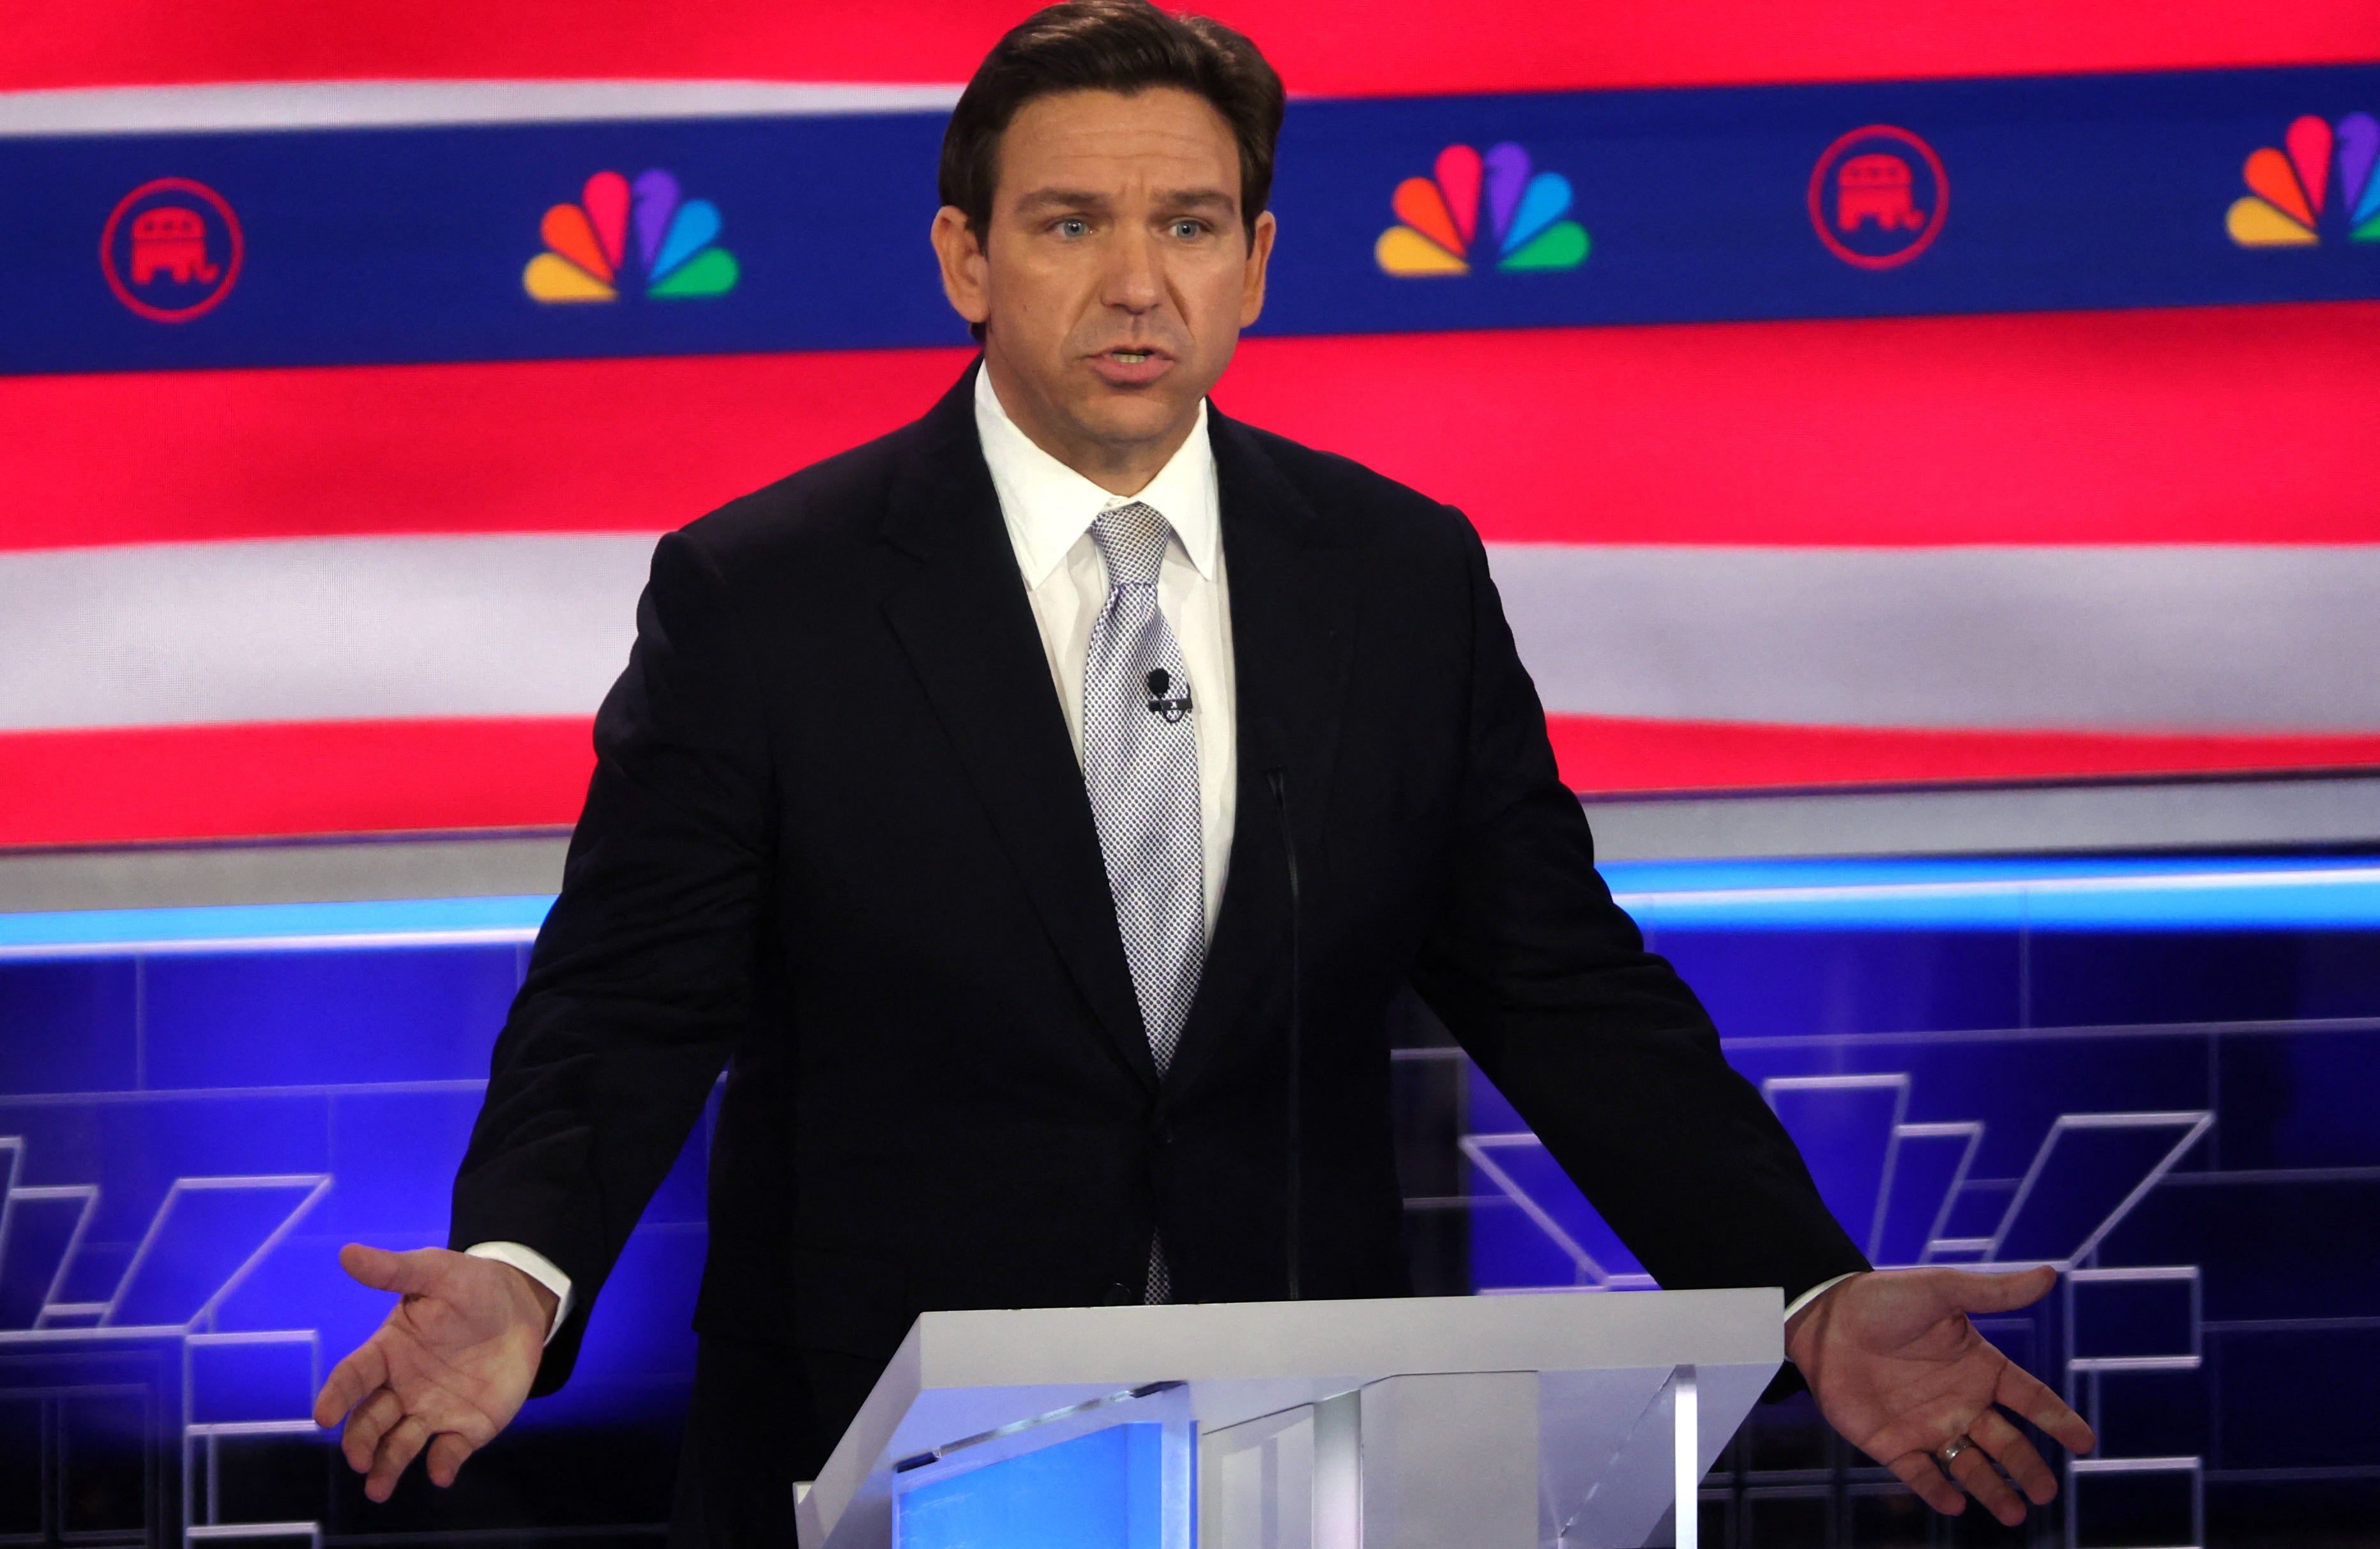 Florida Governor Ron DeSantis speaks at the third Republican candidates' U.S. presidential debate